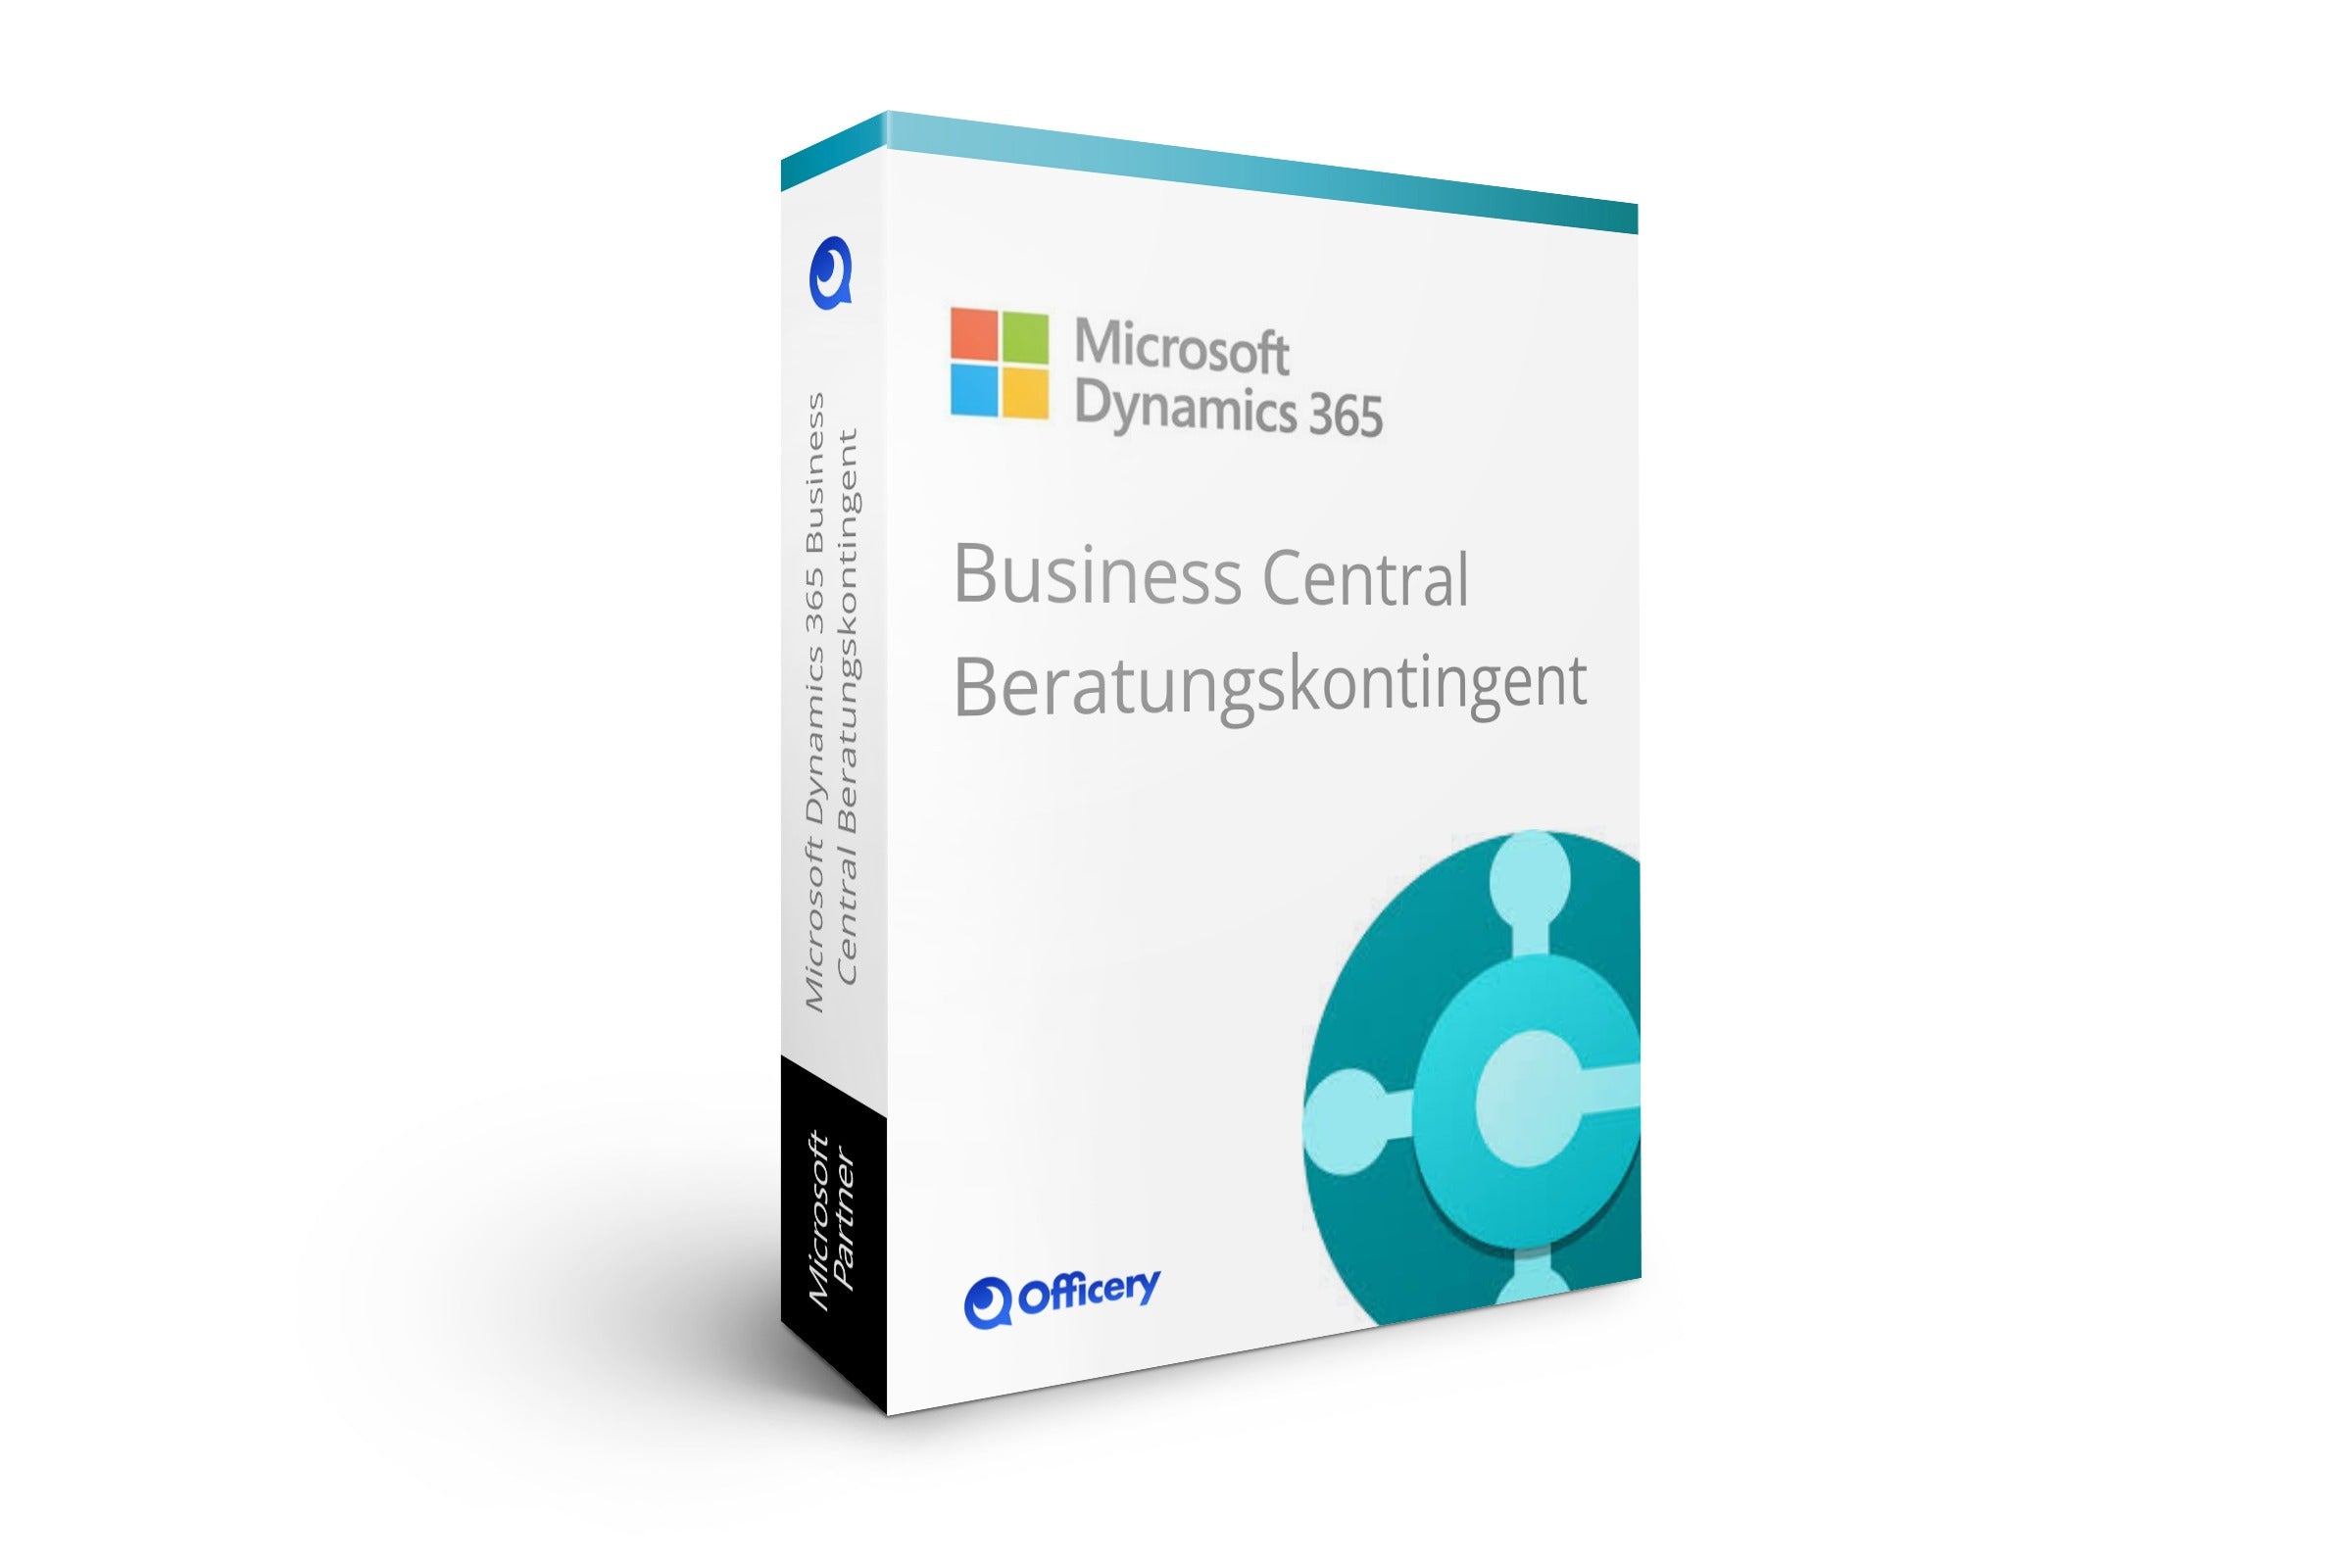 Microsoft Dynamics 365 Business Central Beratungskontingent